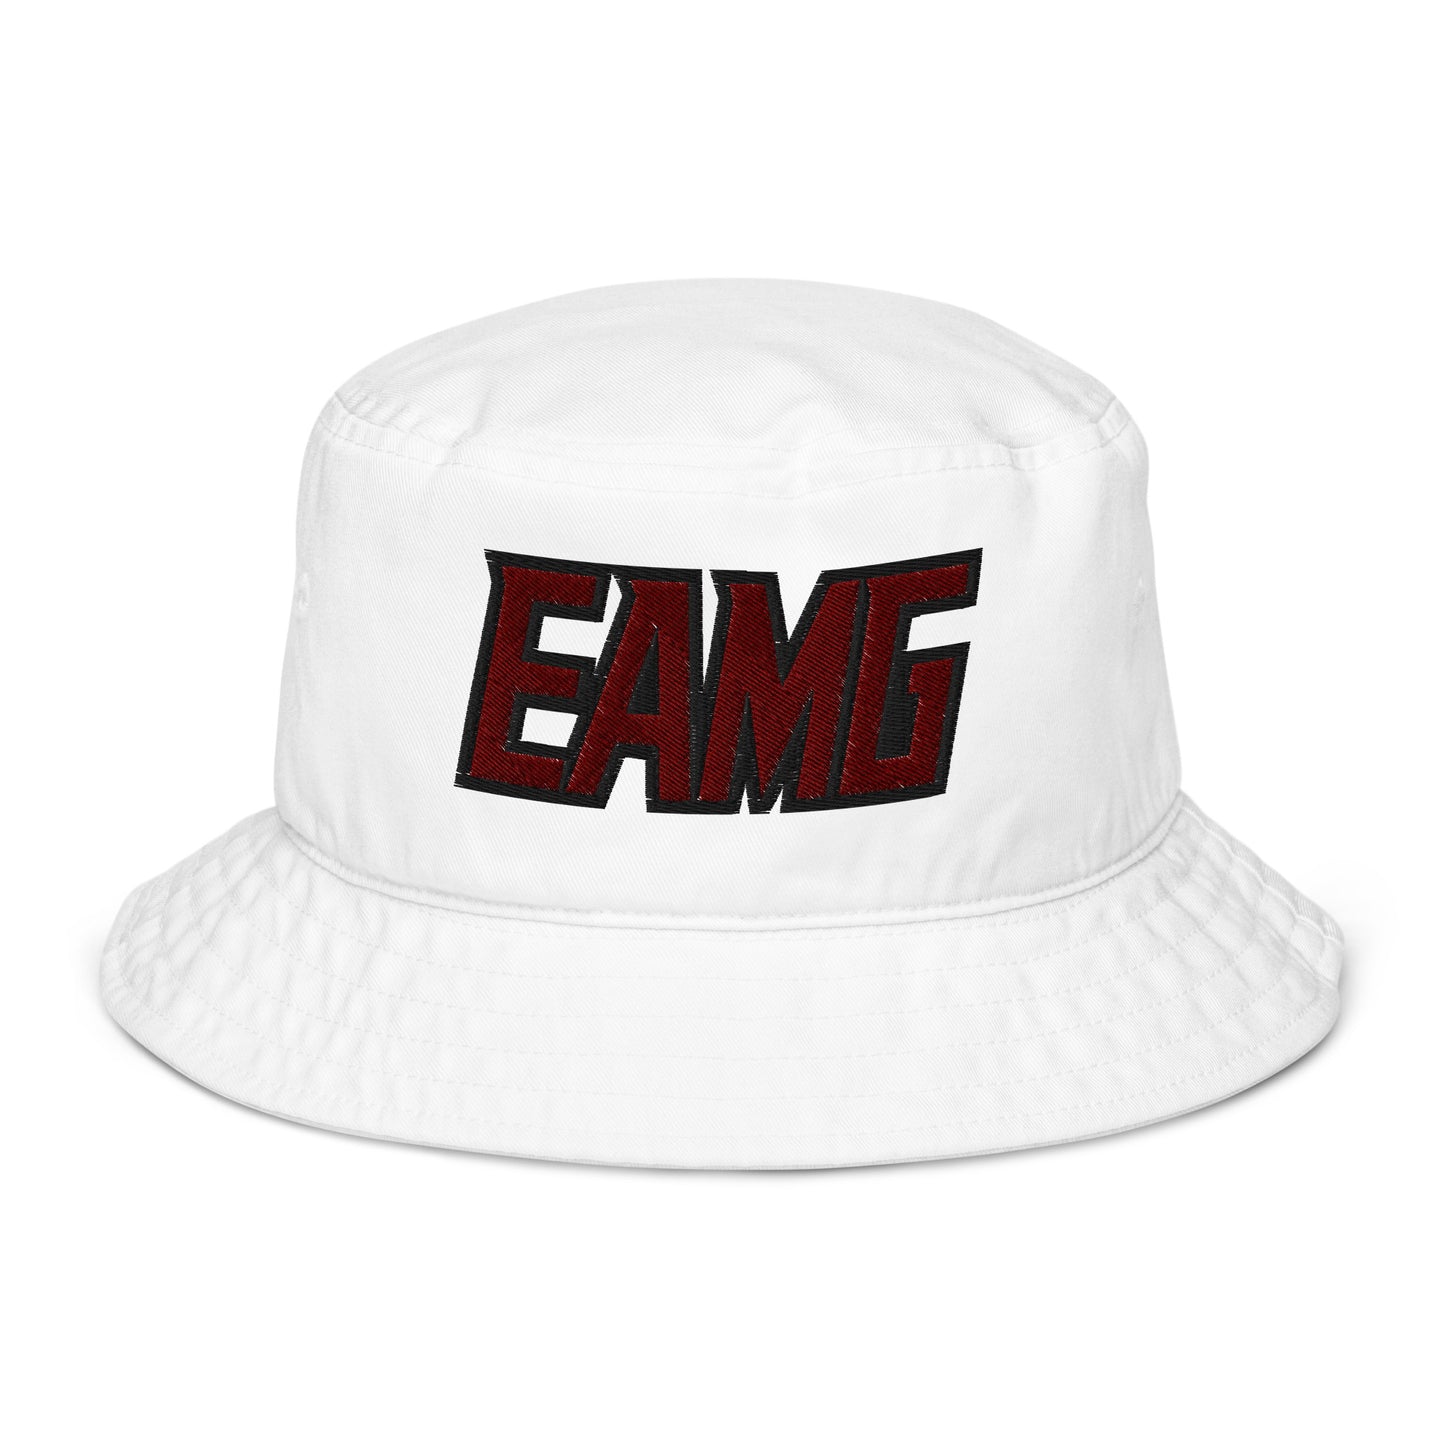 EAMG Organic bucket hat